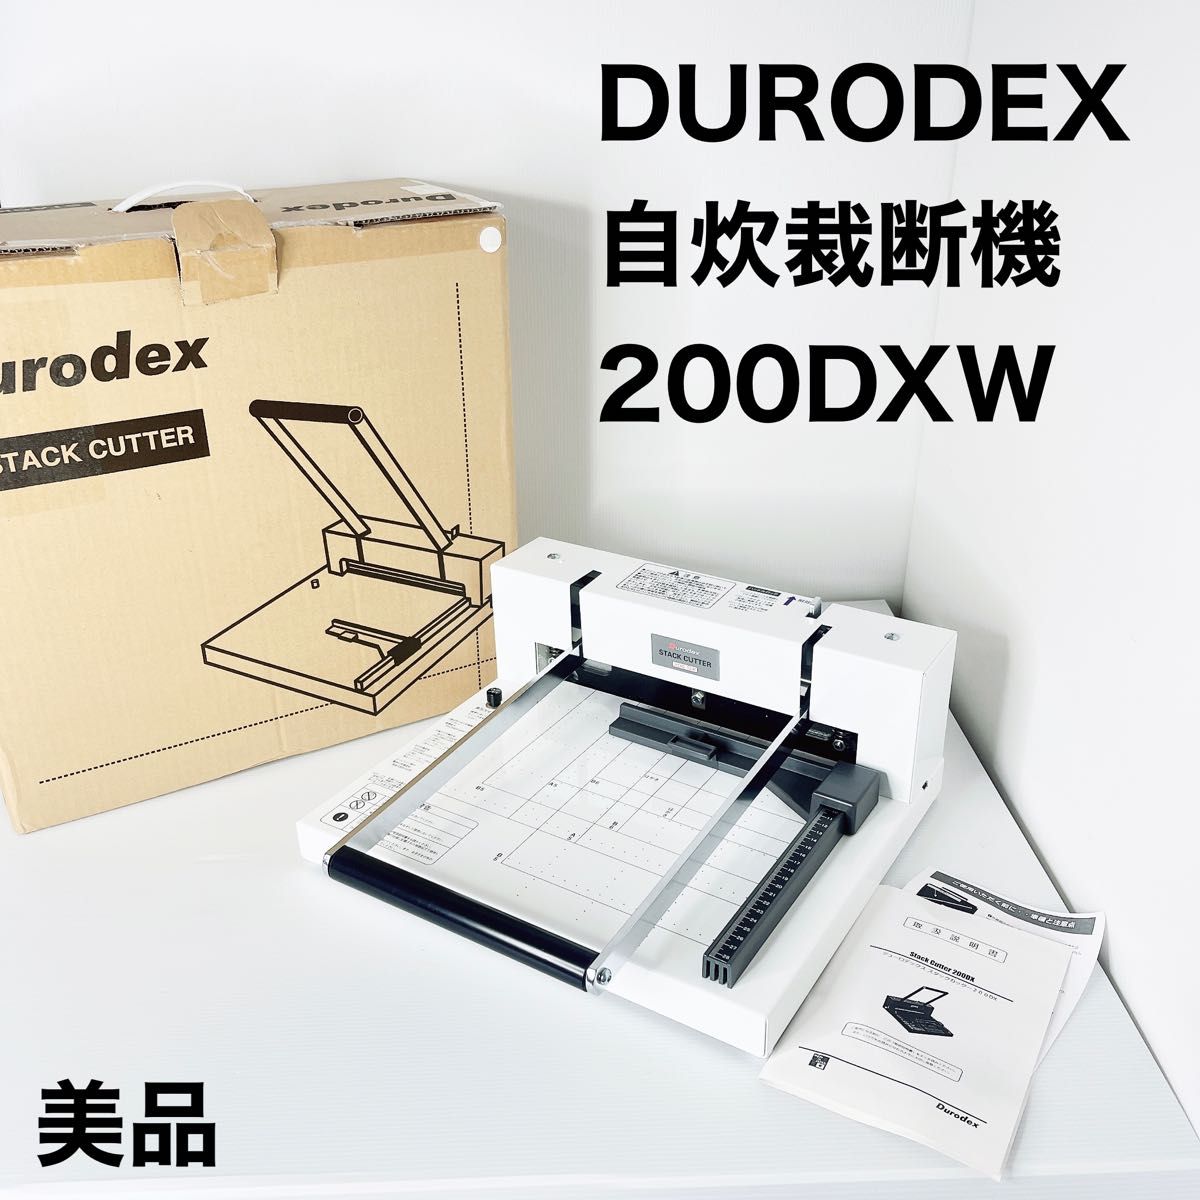 DURODEX 自炊裁断機 ホワイト 200DXW 文具、ステーショナリー はさみ